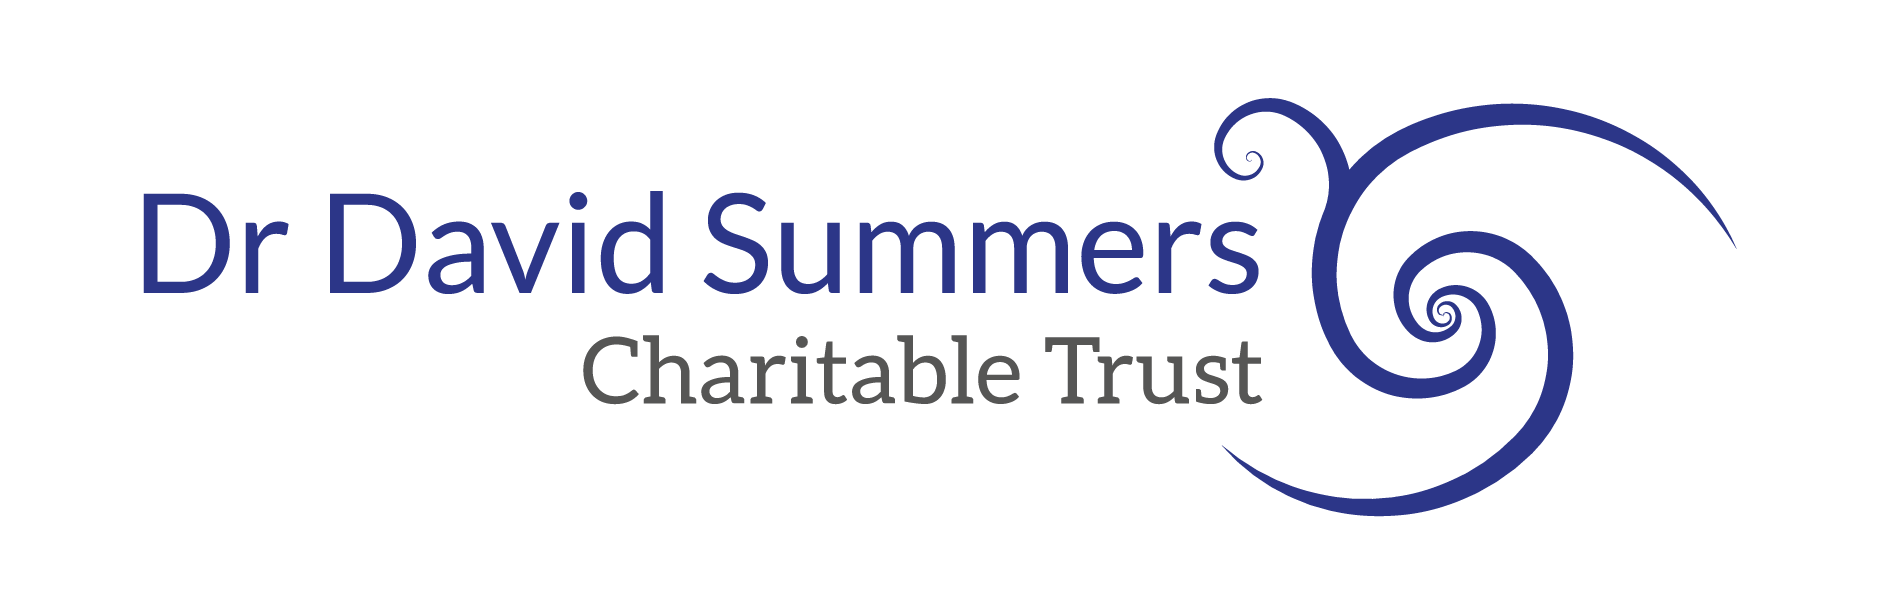 Dr David Summers charitable trust logo